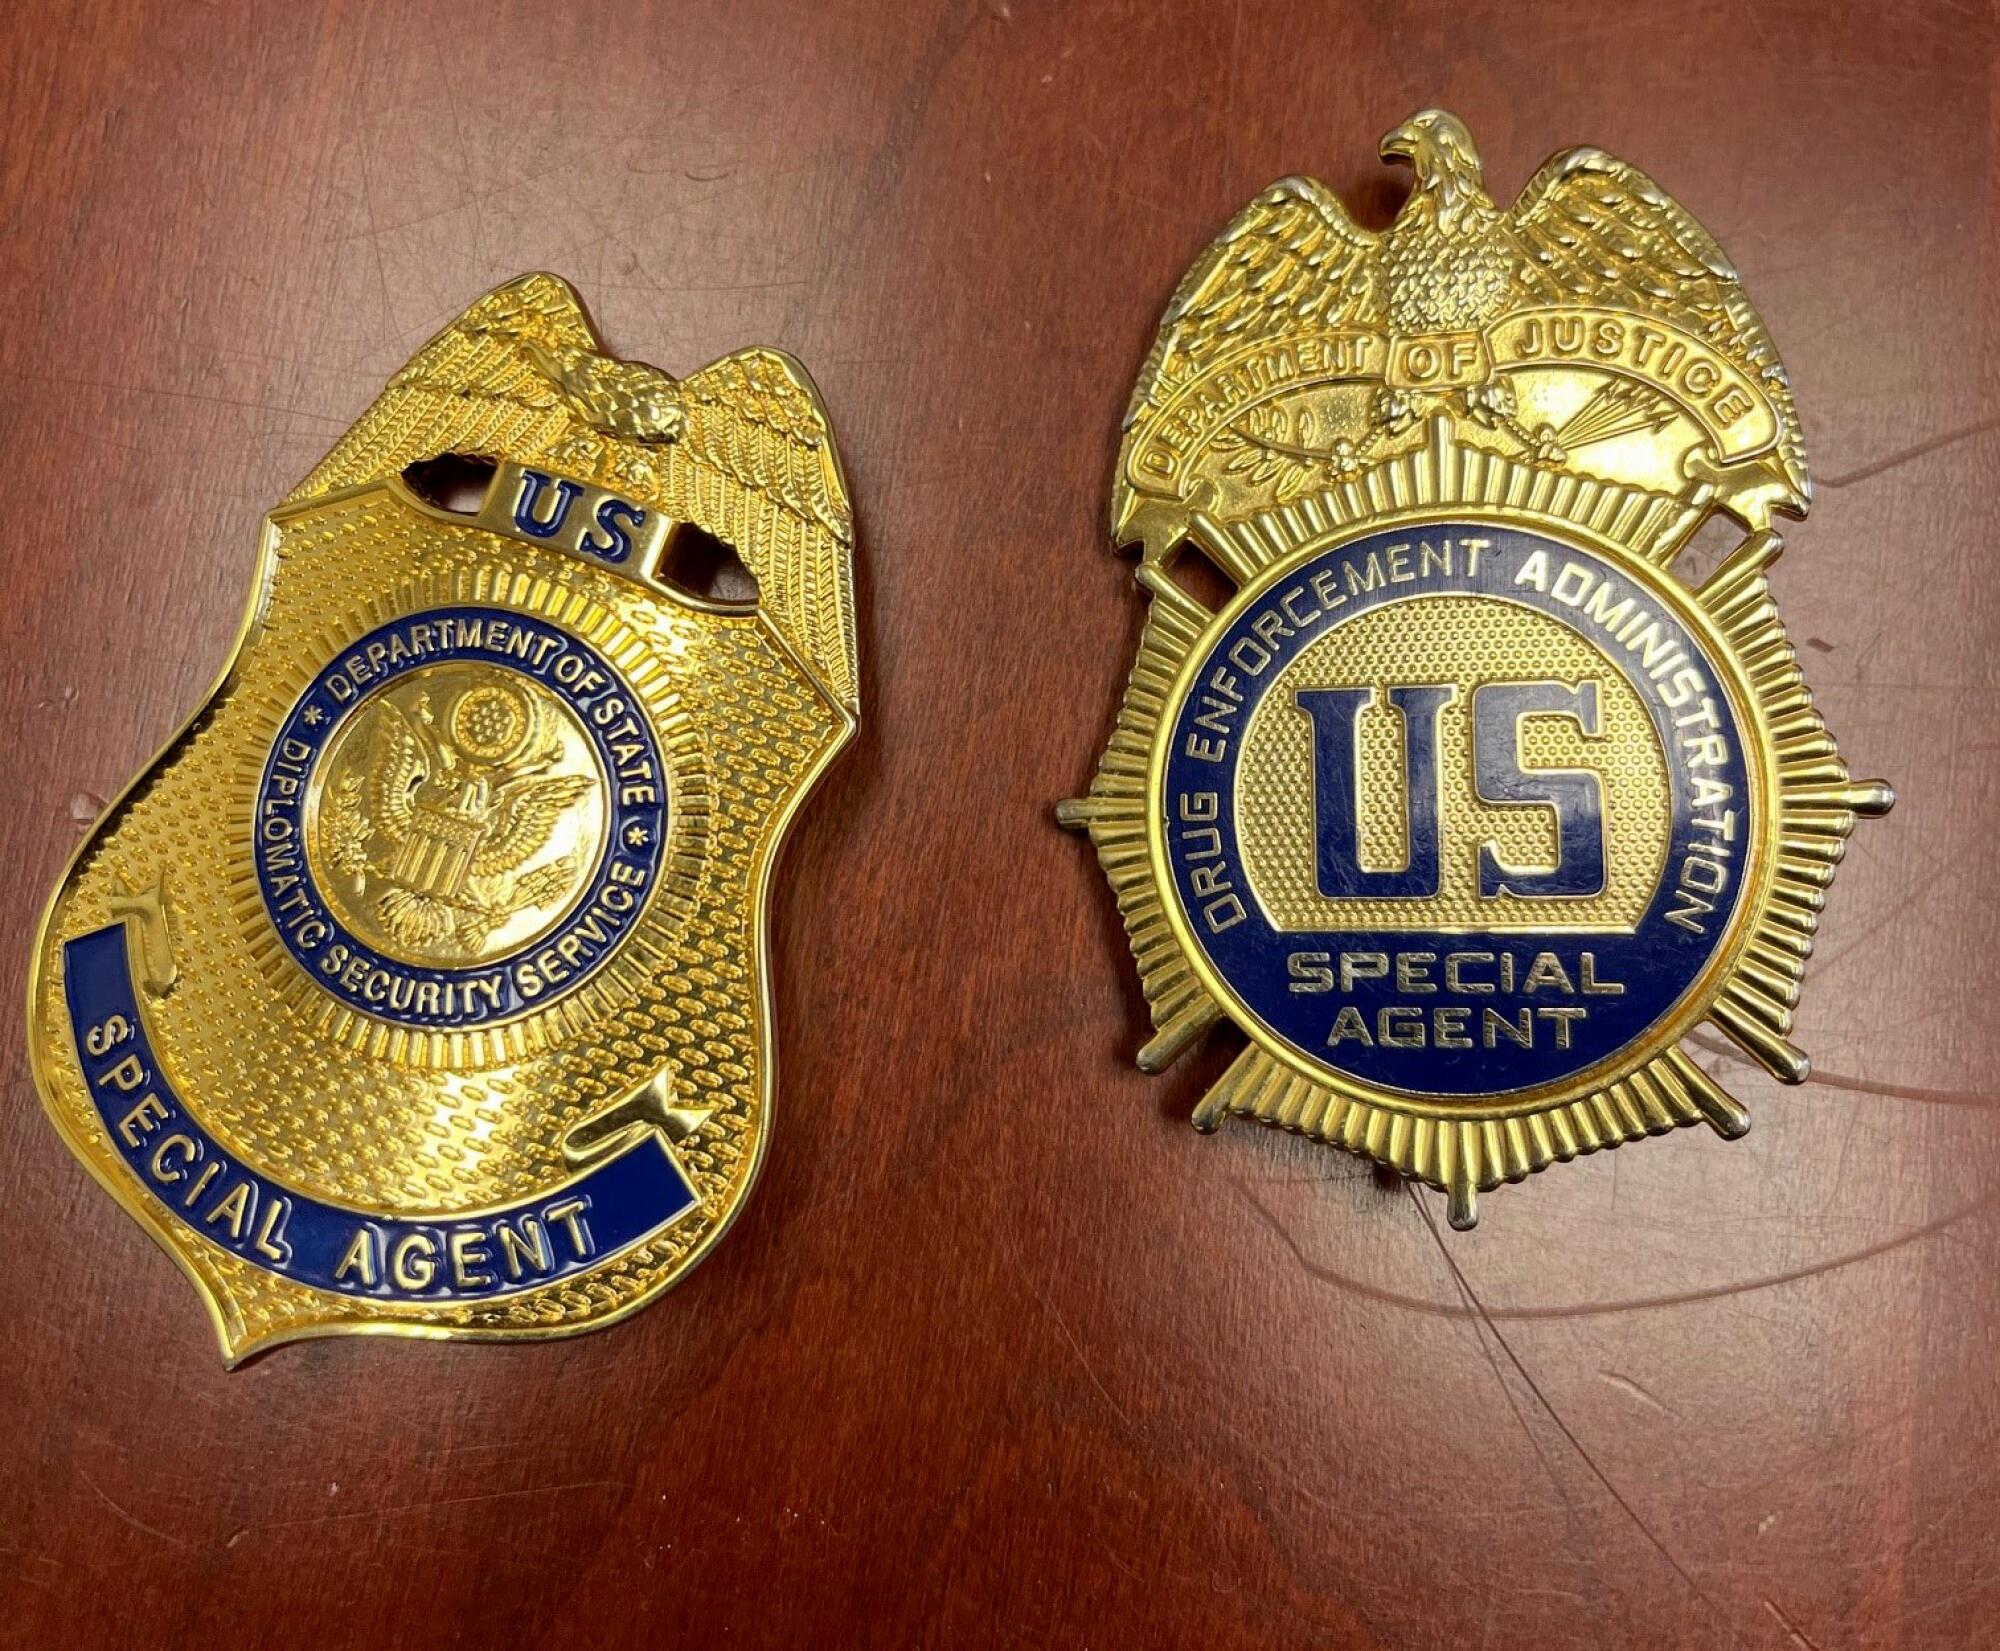 A pair of fake badges.